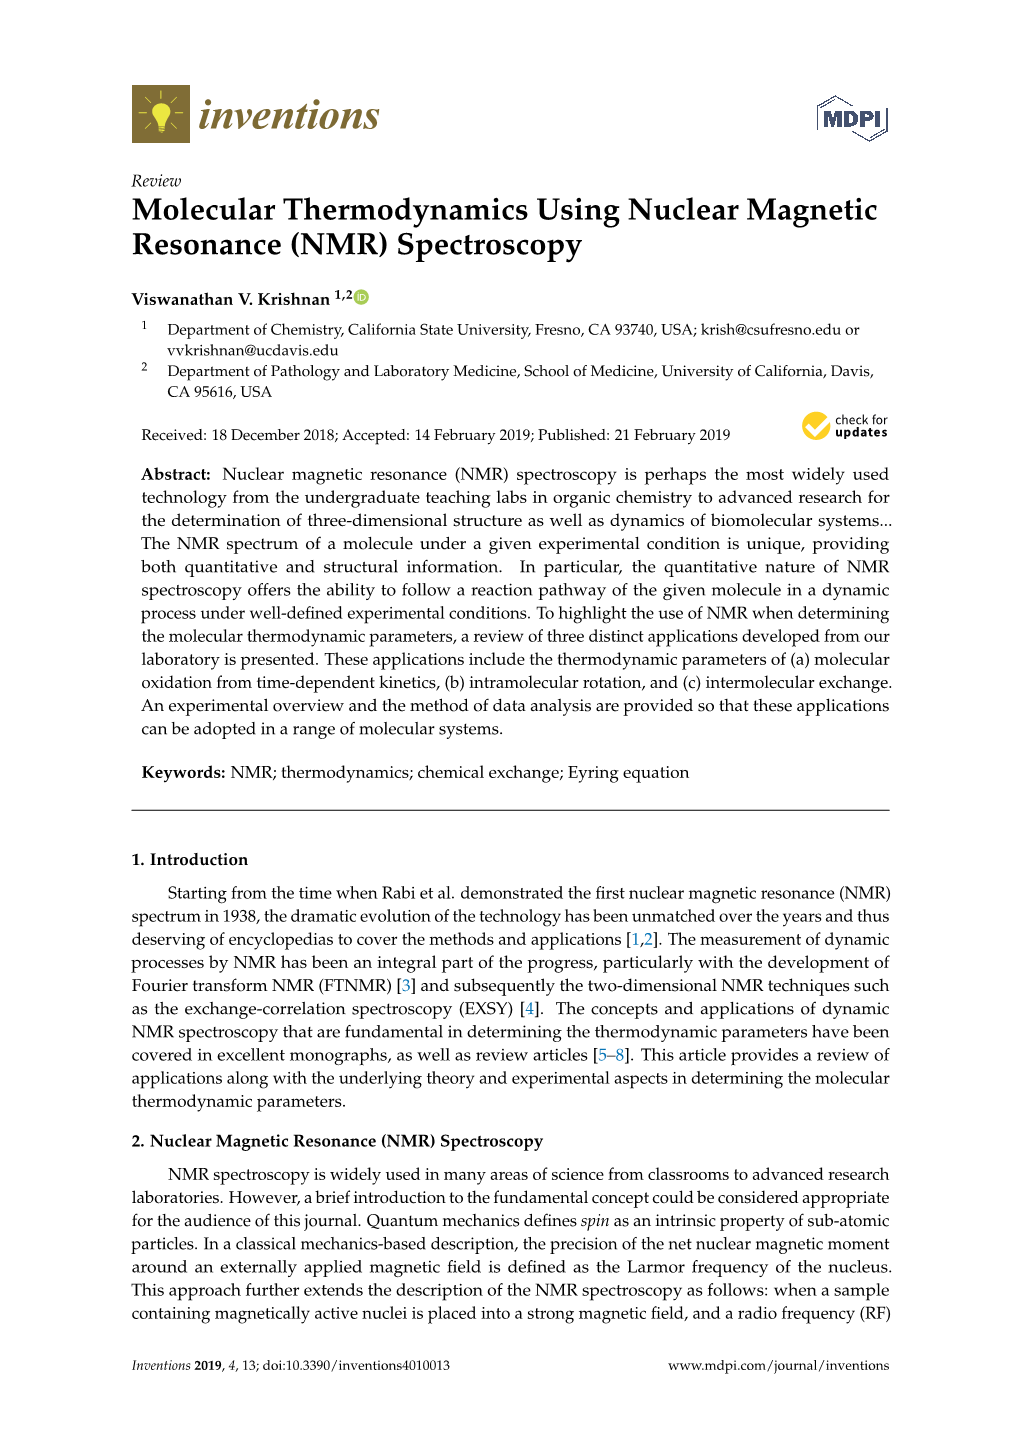 Molecular Thermodynamics Using Nuclear Magnetic Resonance (NMR) Spectroscopy